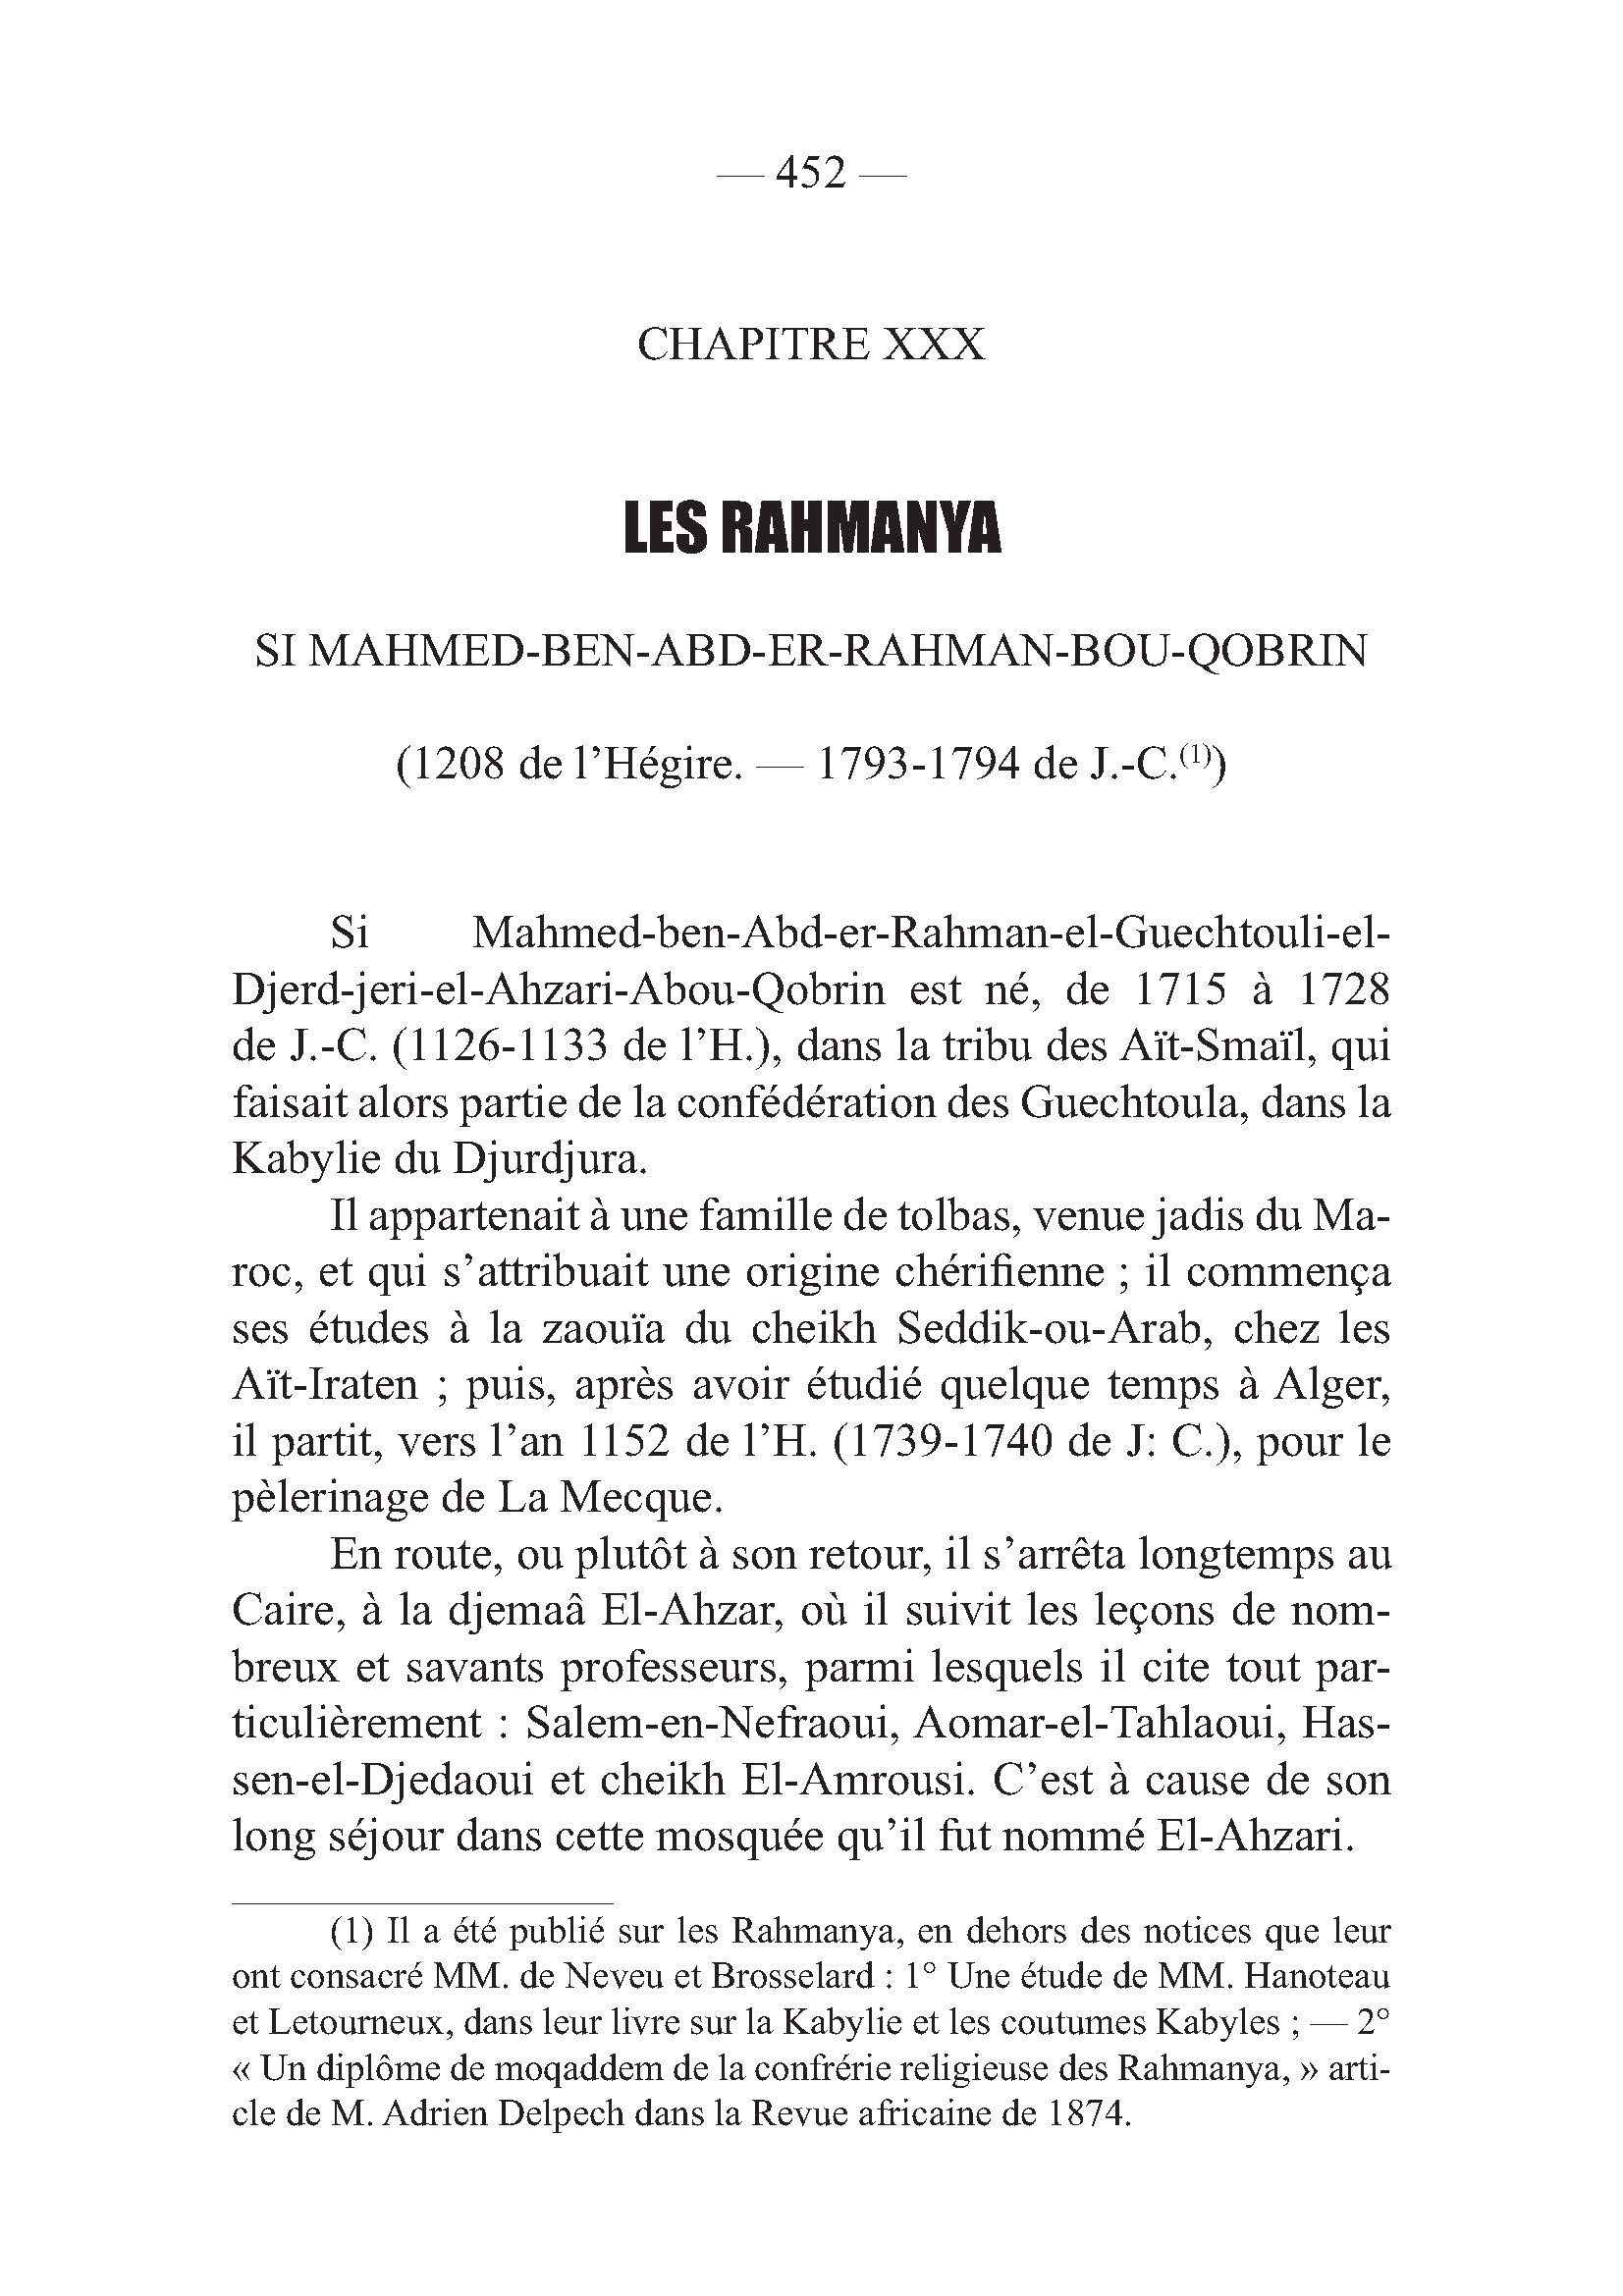 marabouts_khouans_page_458